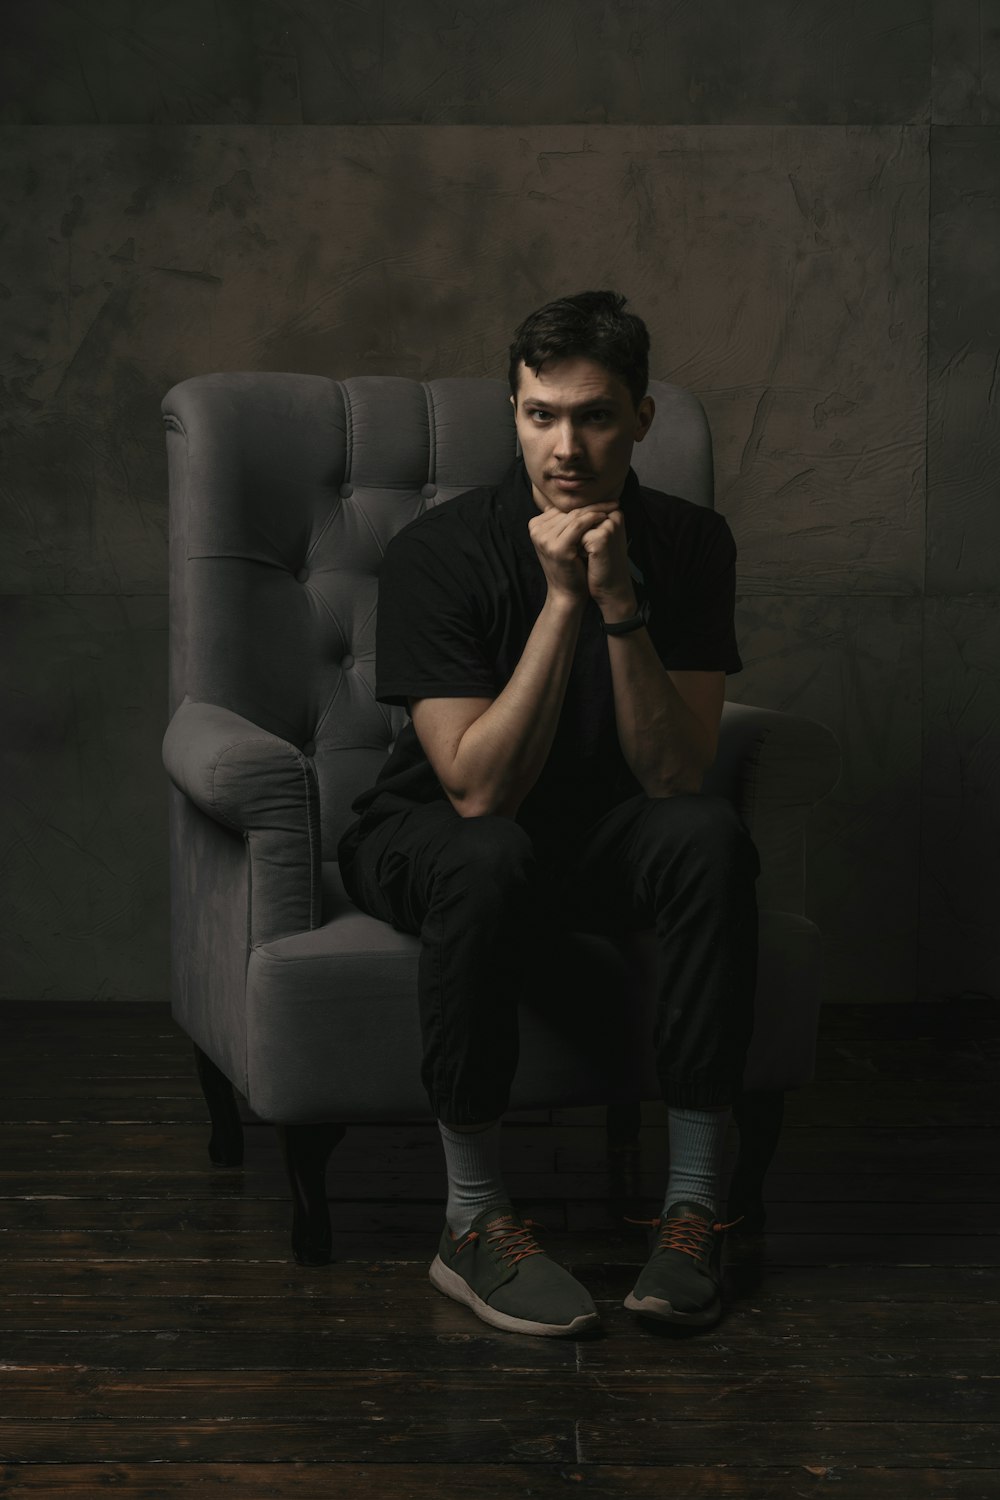 Un uomo seduto su una sedia in una stanza buia